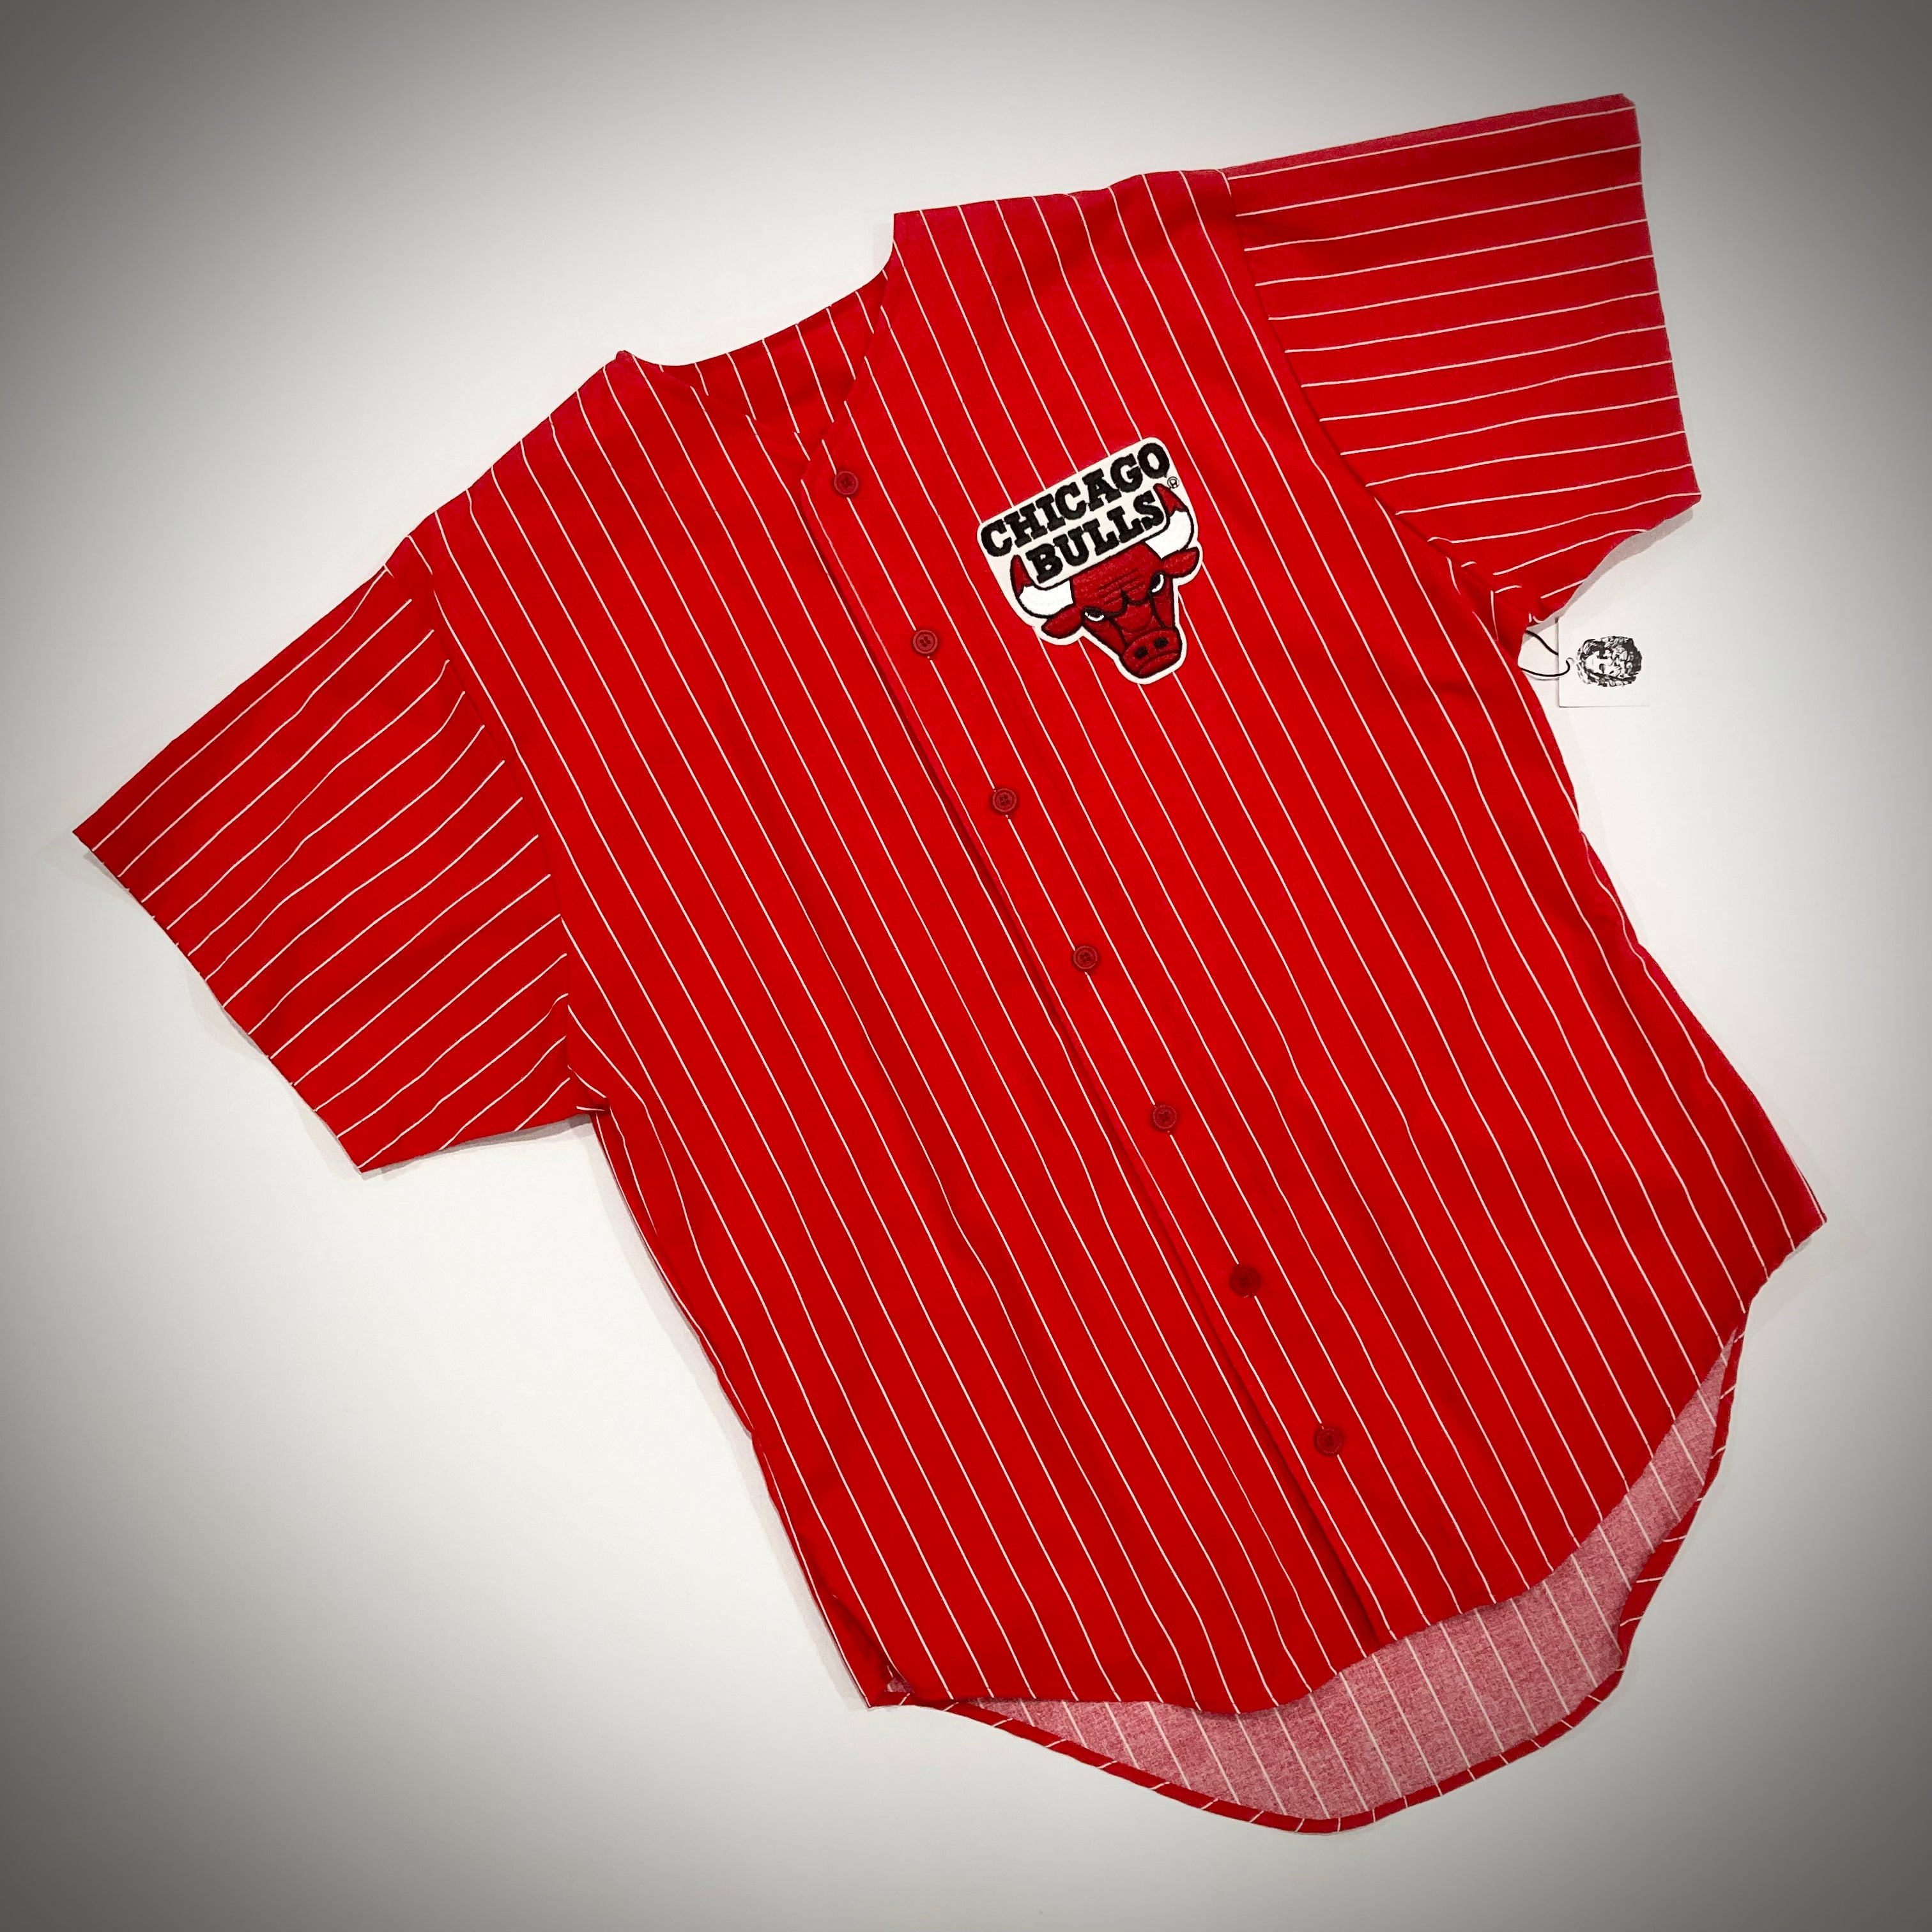 Vintage Chicago Bulls Baseball Jersey